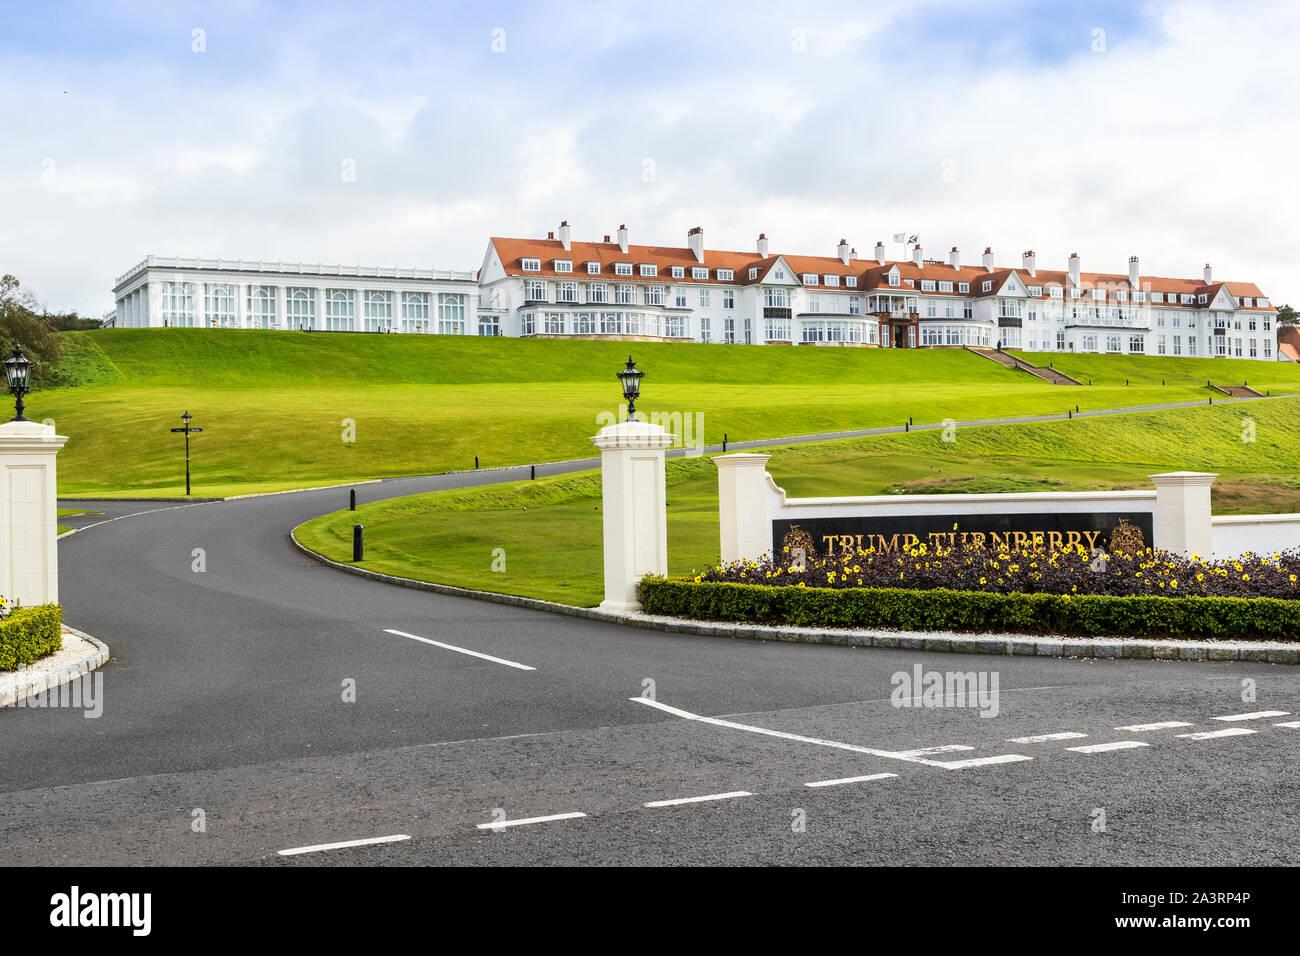 Turnberry Trump Hotel and Golf Resort, montrant la route d'accès principale, Turnberry, Ayrshire, Scotland, UK Banque D'Images